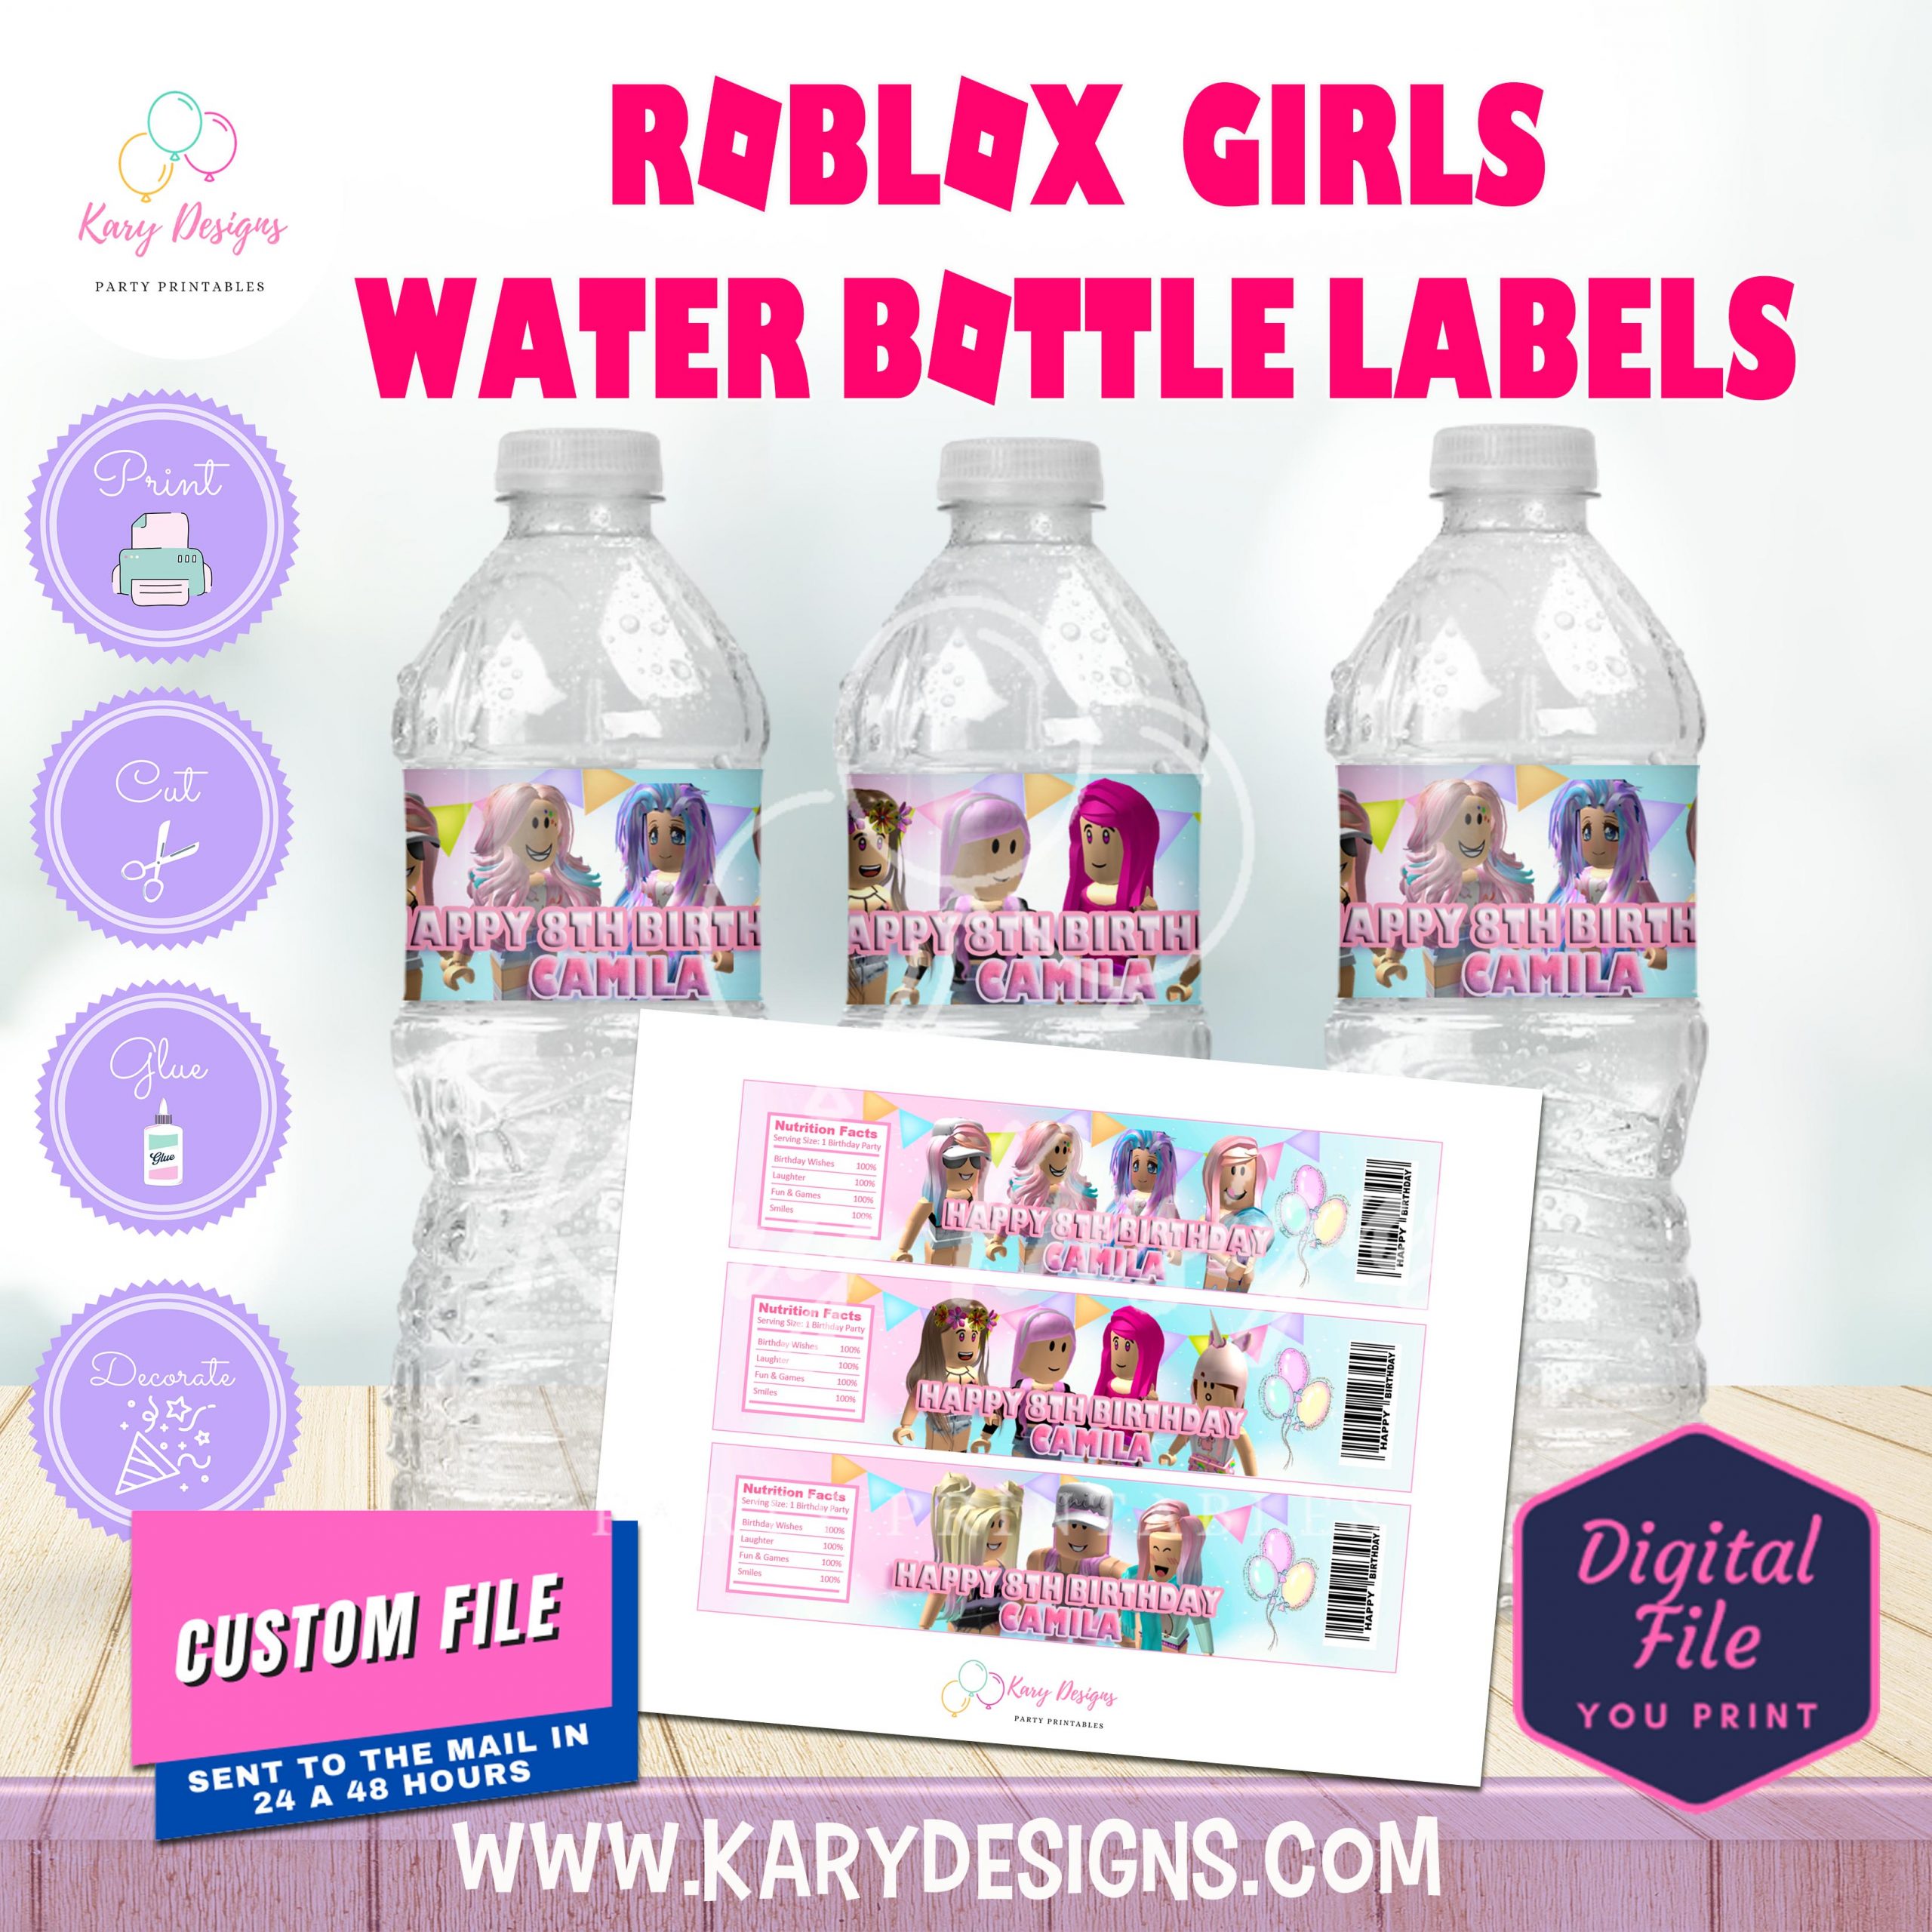 https://karydesigns.com/wp-content/uploads/2021/08/roblox-girls-water-bottle-labels-scaled.jpg